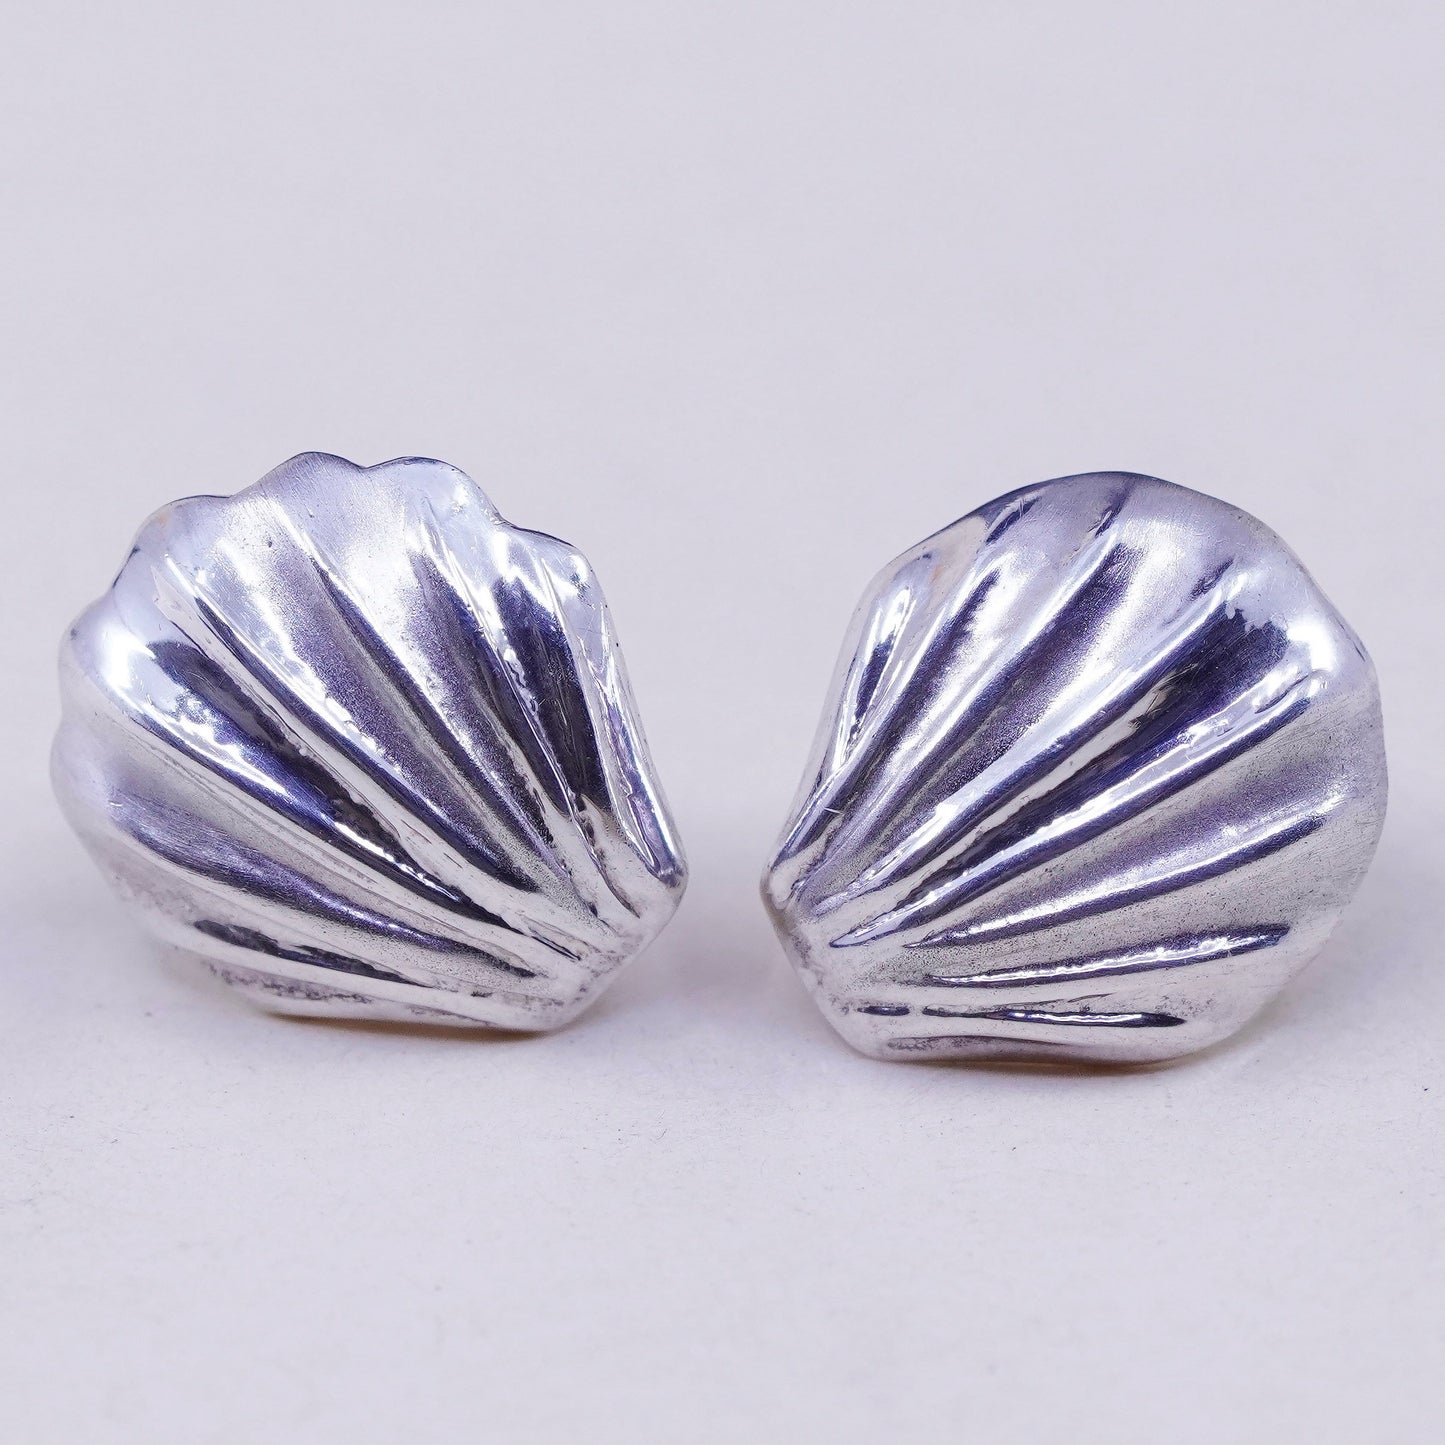 Vintage sterling silver handmade earrings, 925 shell studs